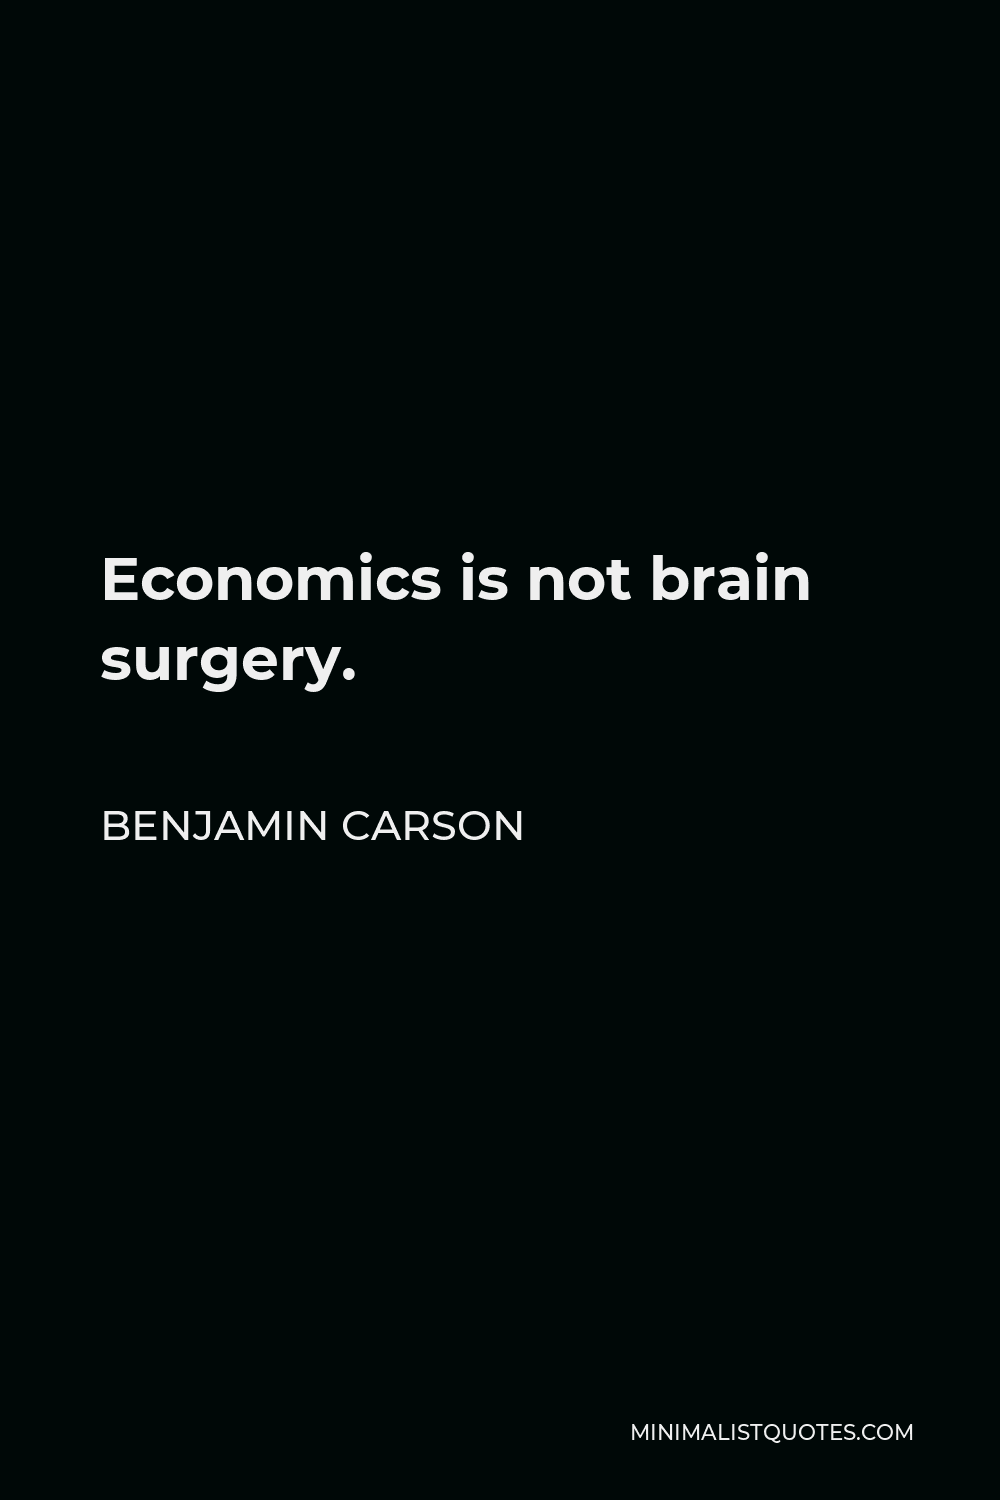 Benjamin Carson Quote - Economics is not brain surgery.